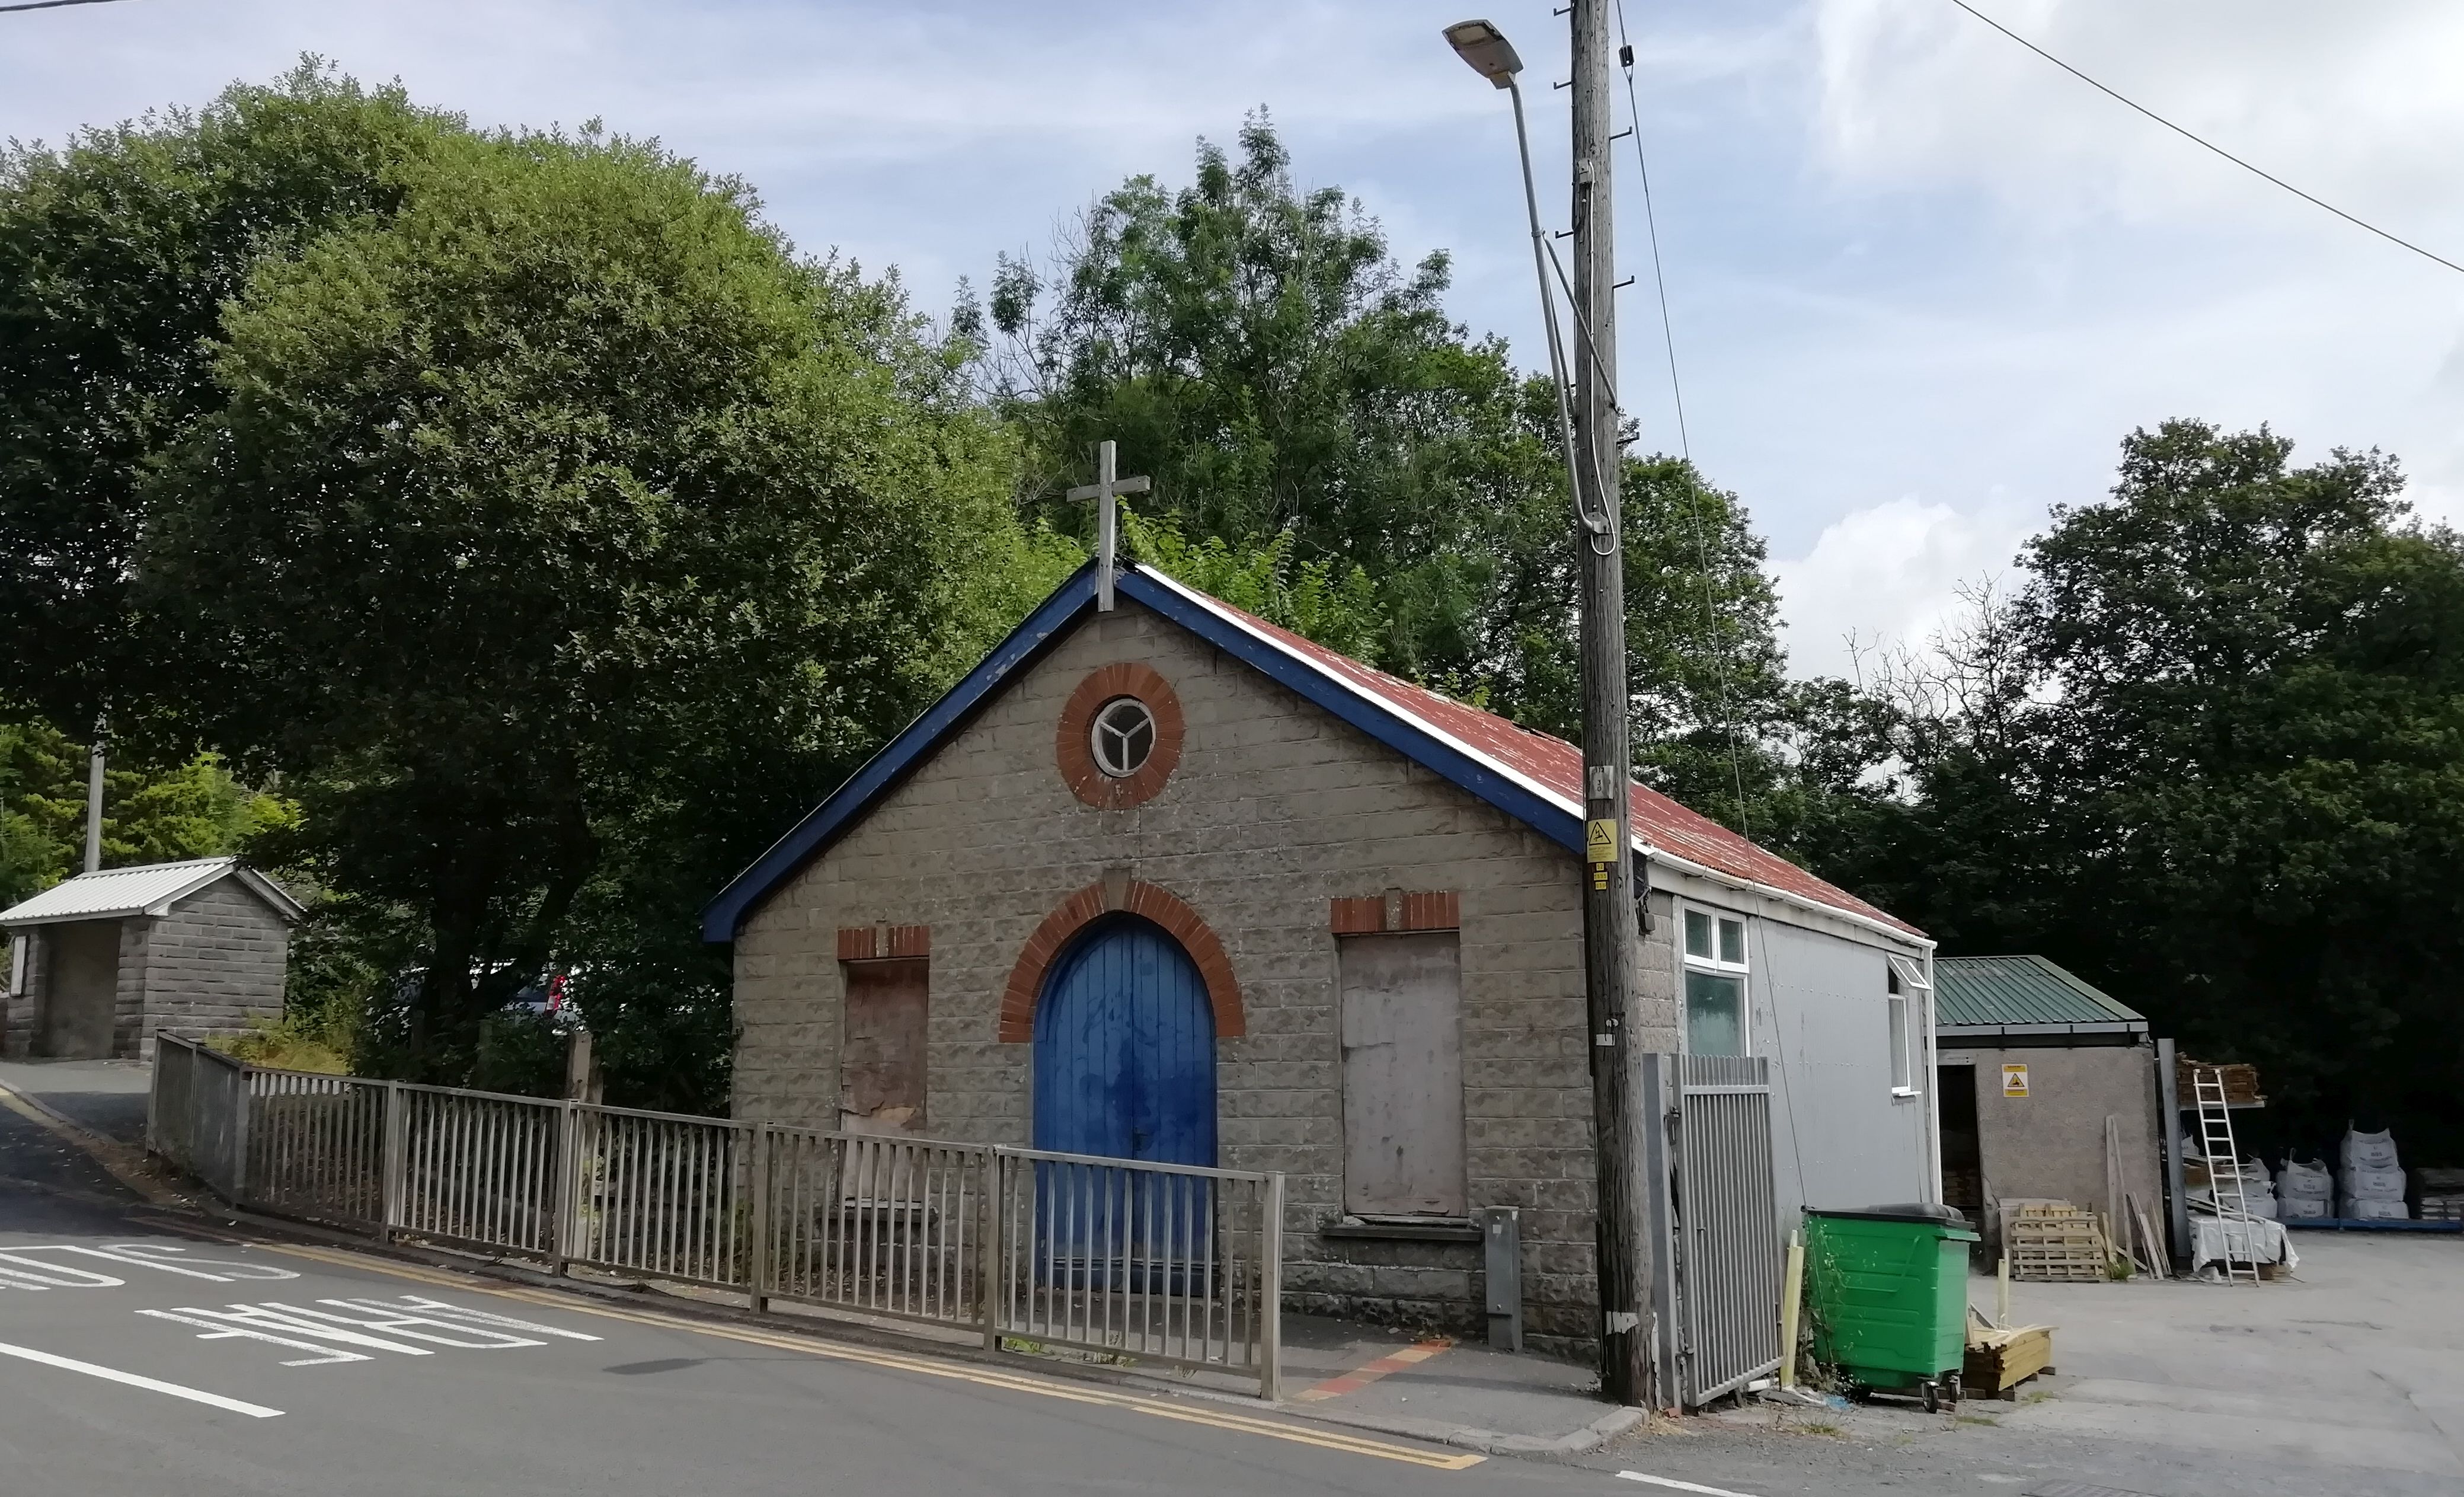 English Congregational Chapel, Brynamman